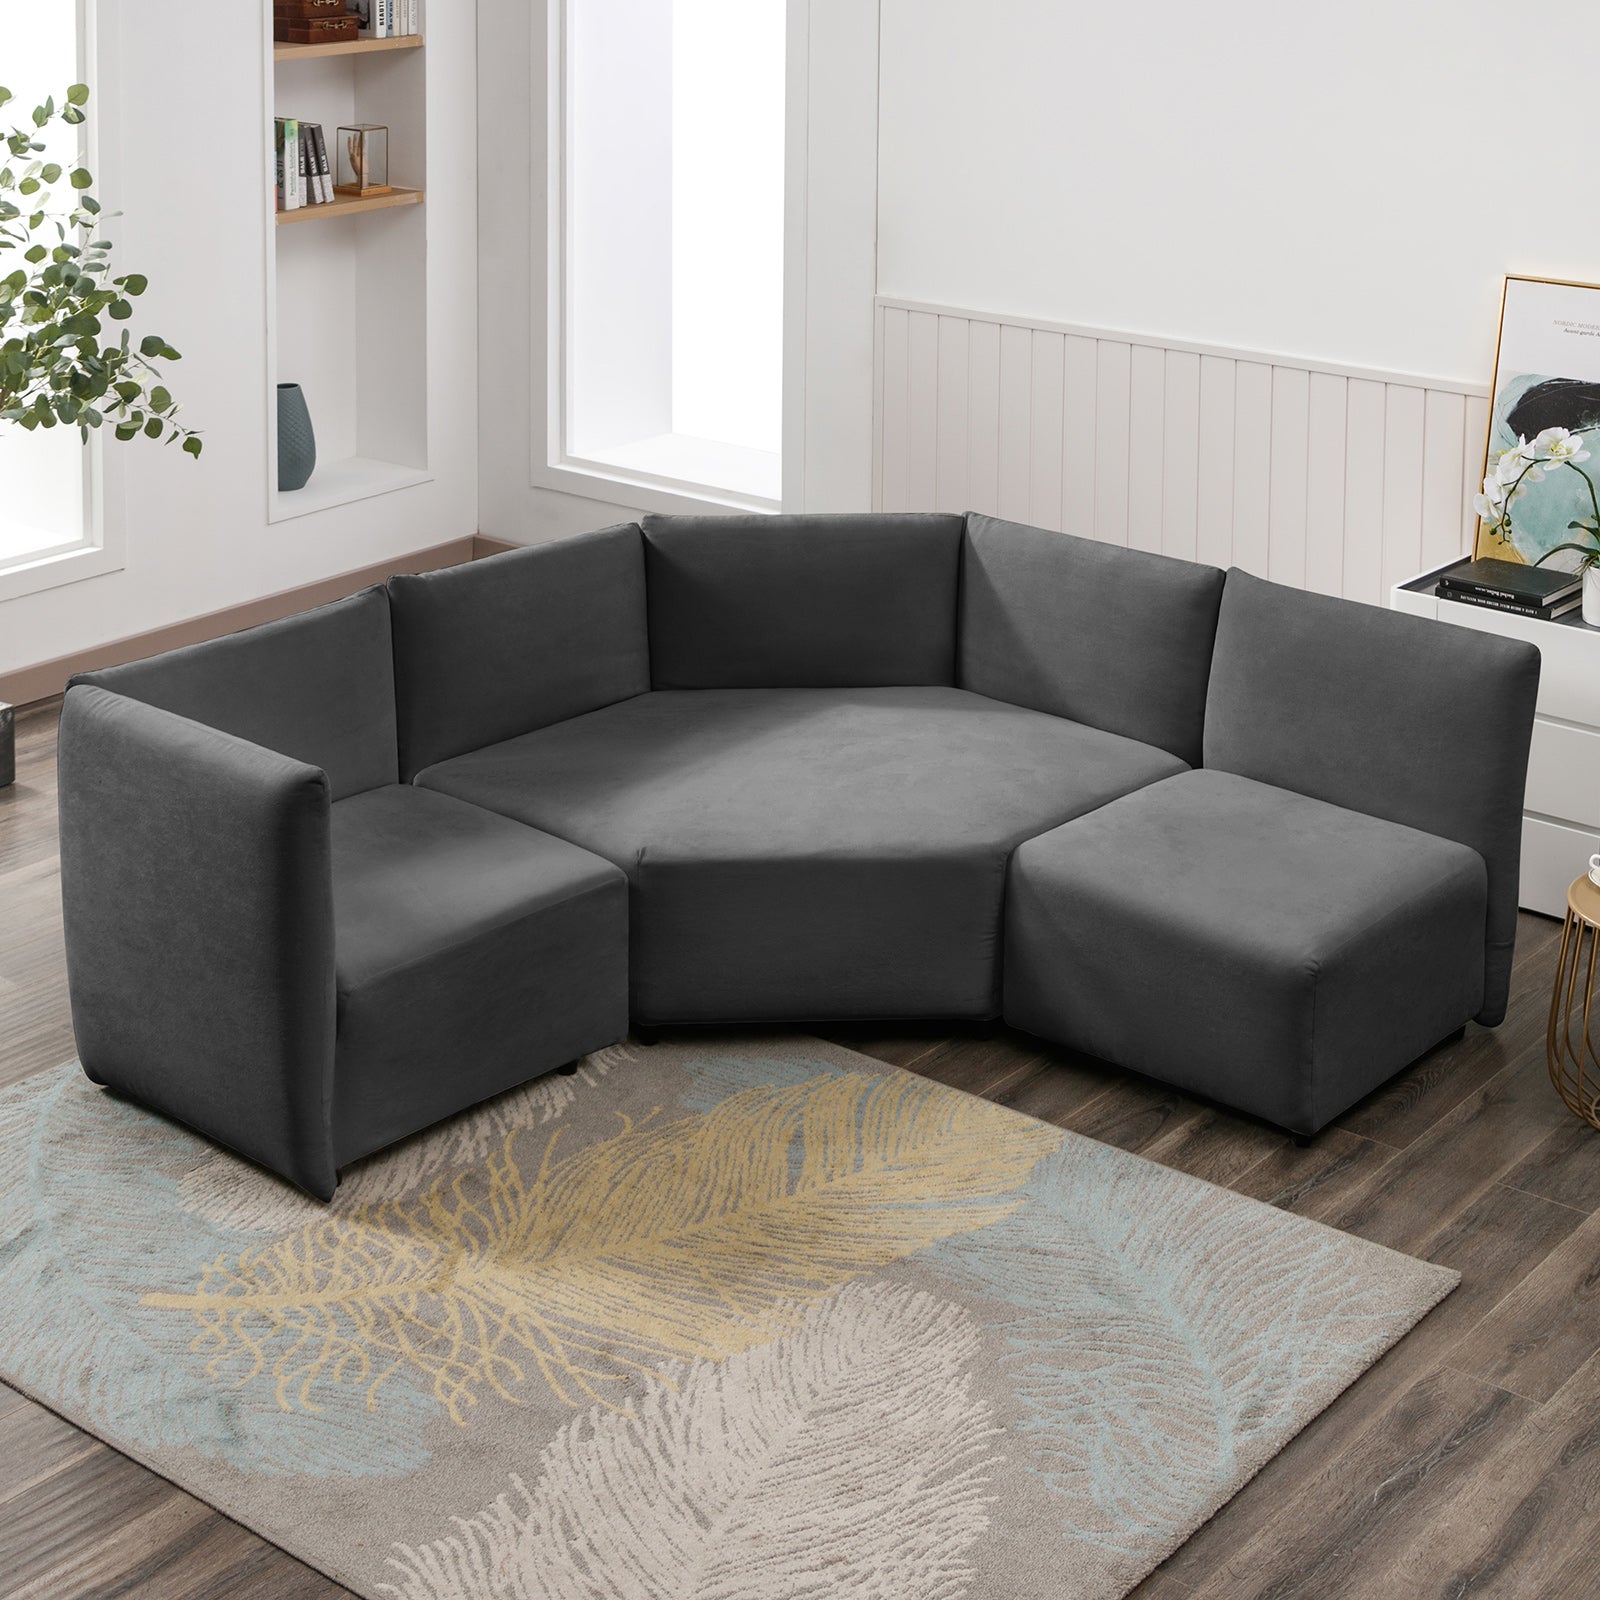 Mjkone 3-Piece Free Combination Curved Modular Sectional Sofa